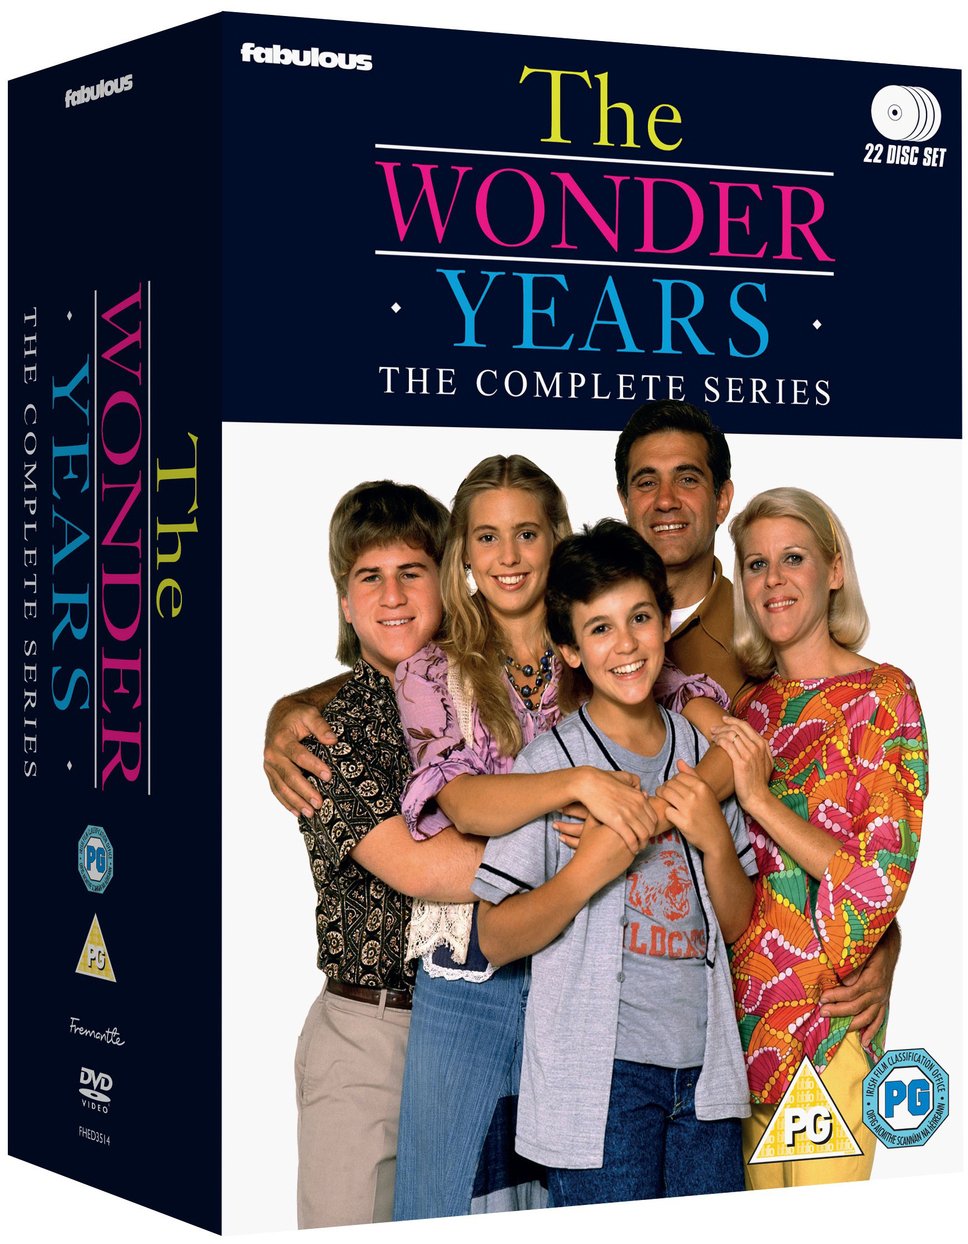 The Wonder Years Complete Series DVD Box Set